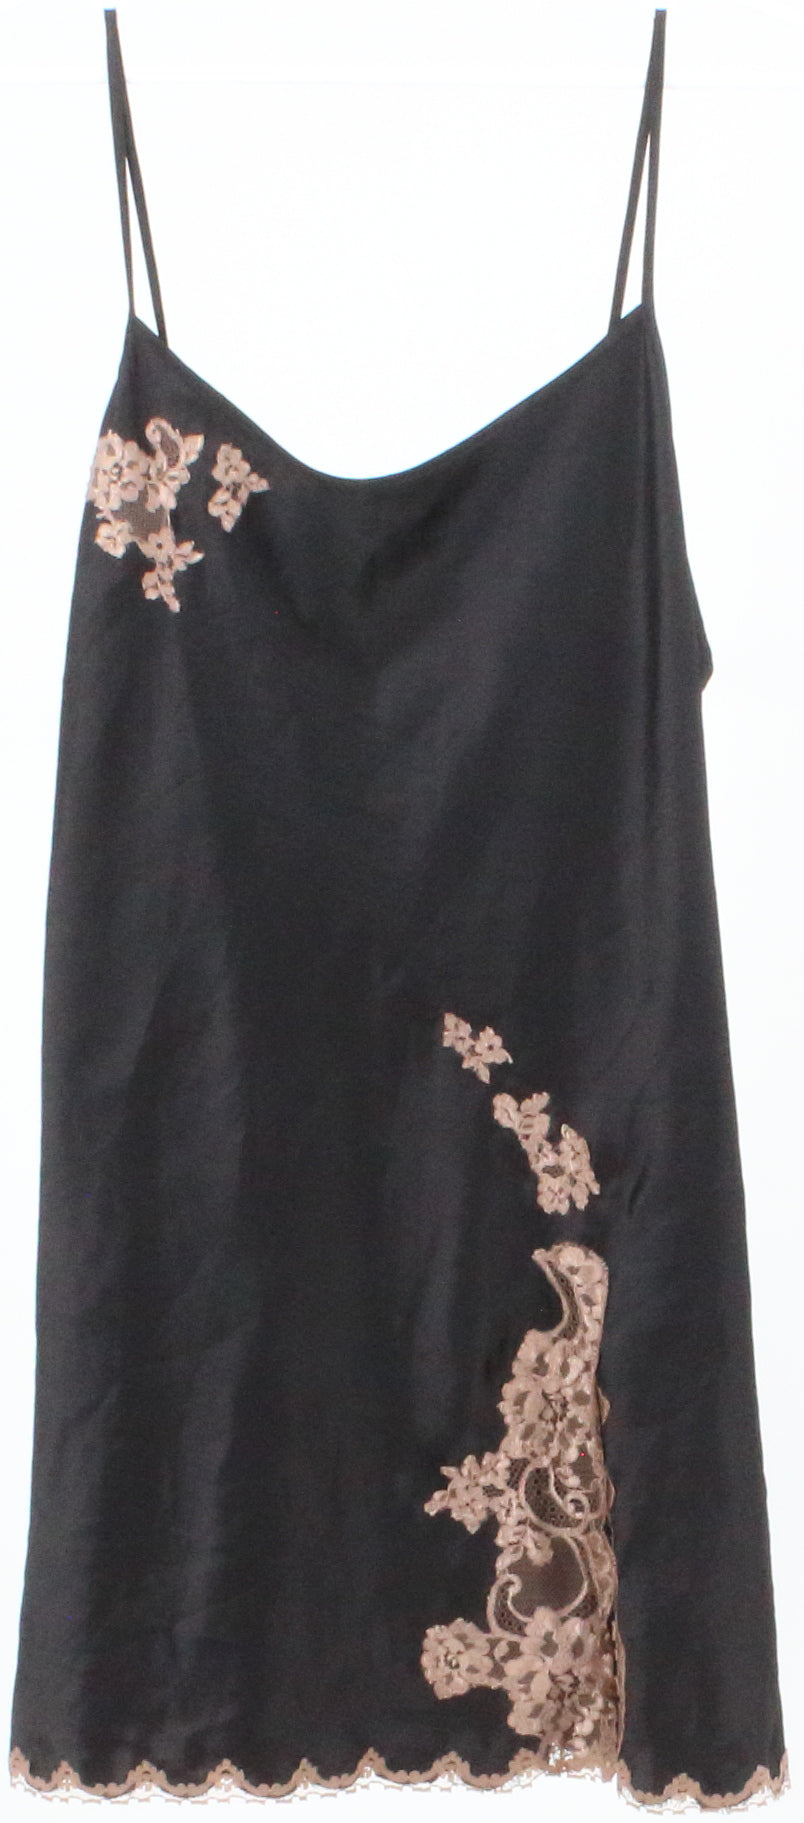 Victoria's Secret Black and Brown Slip Dress